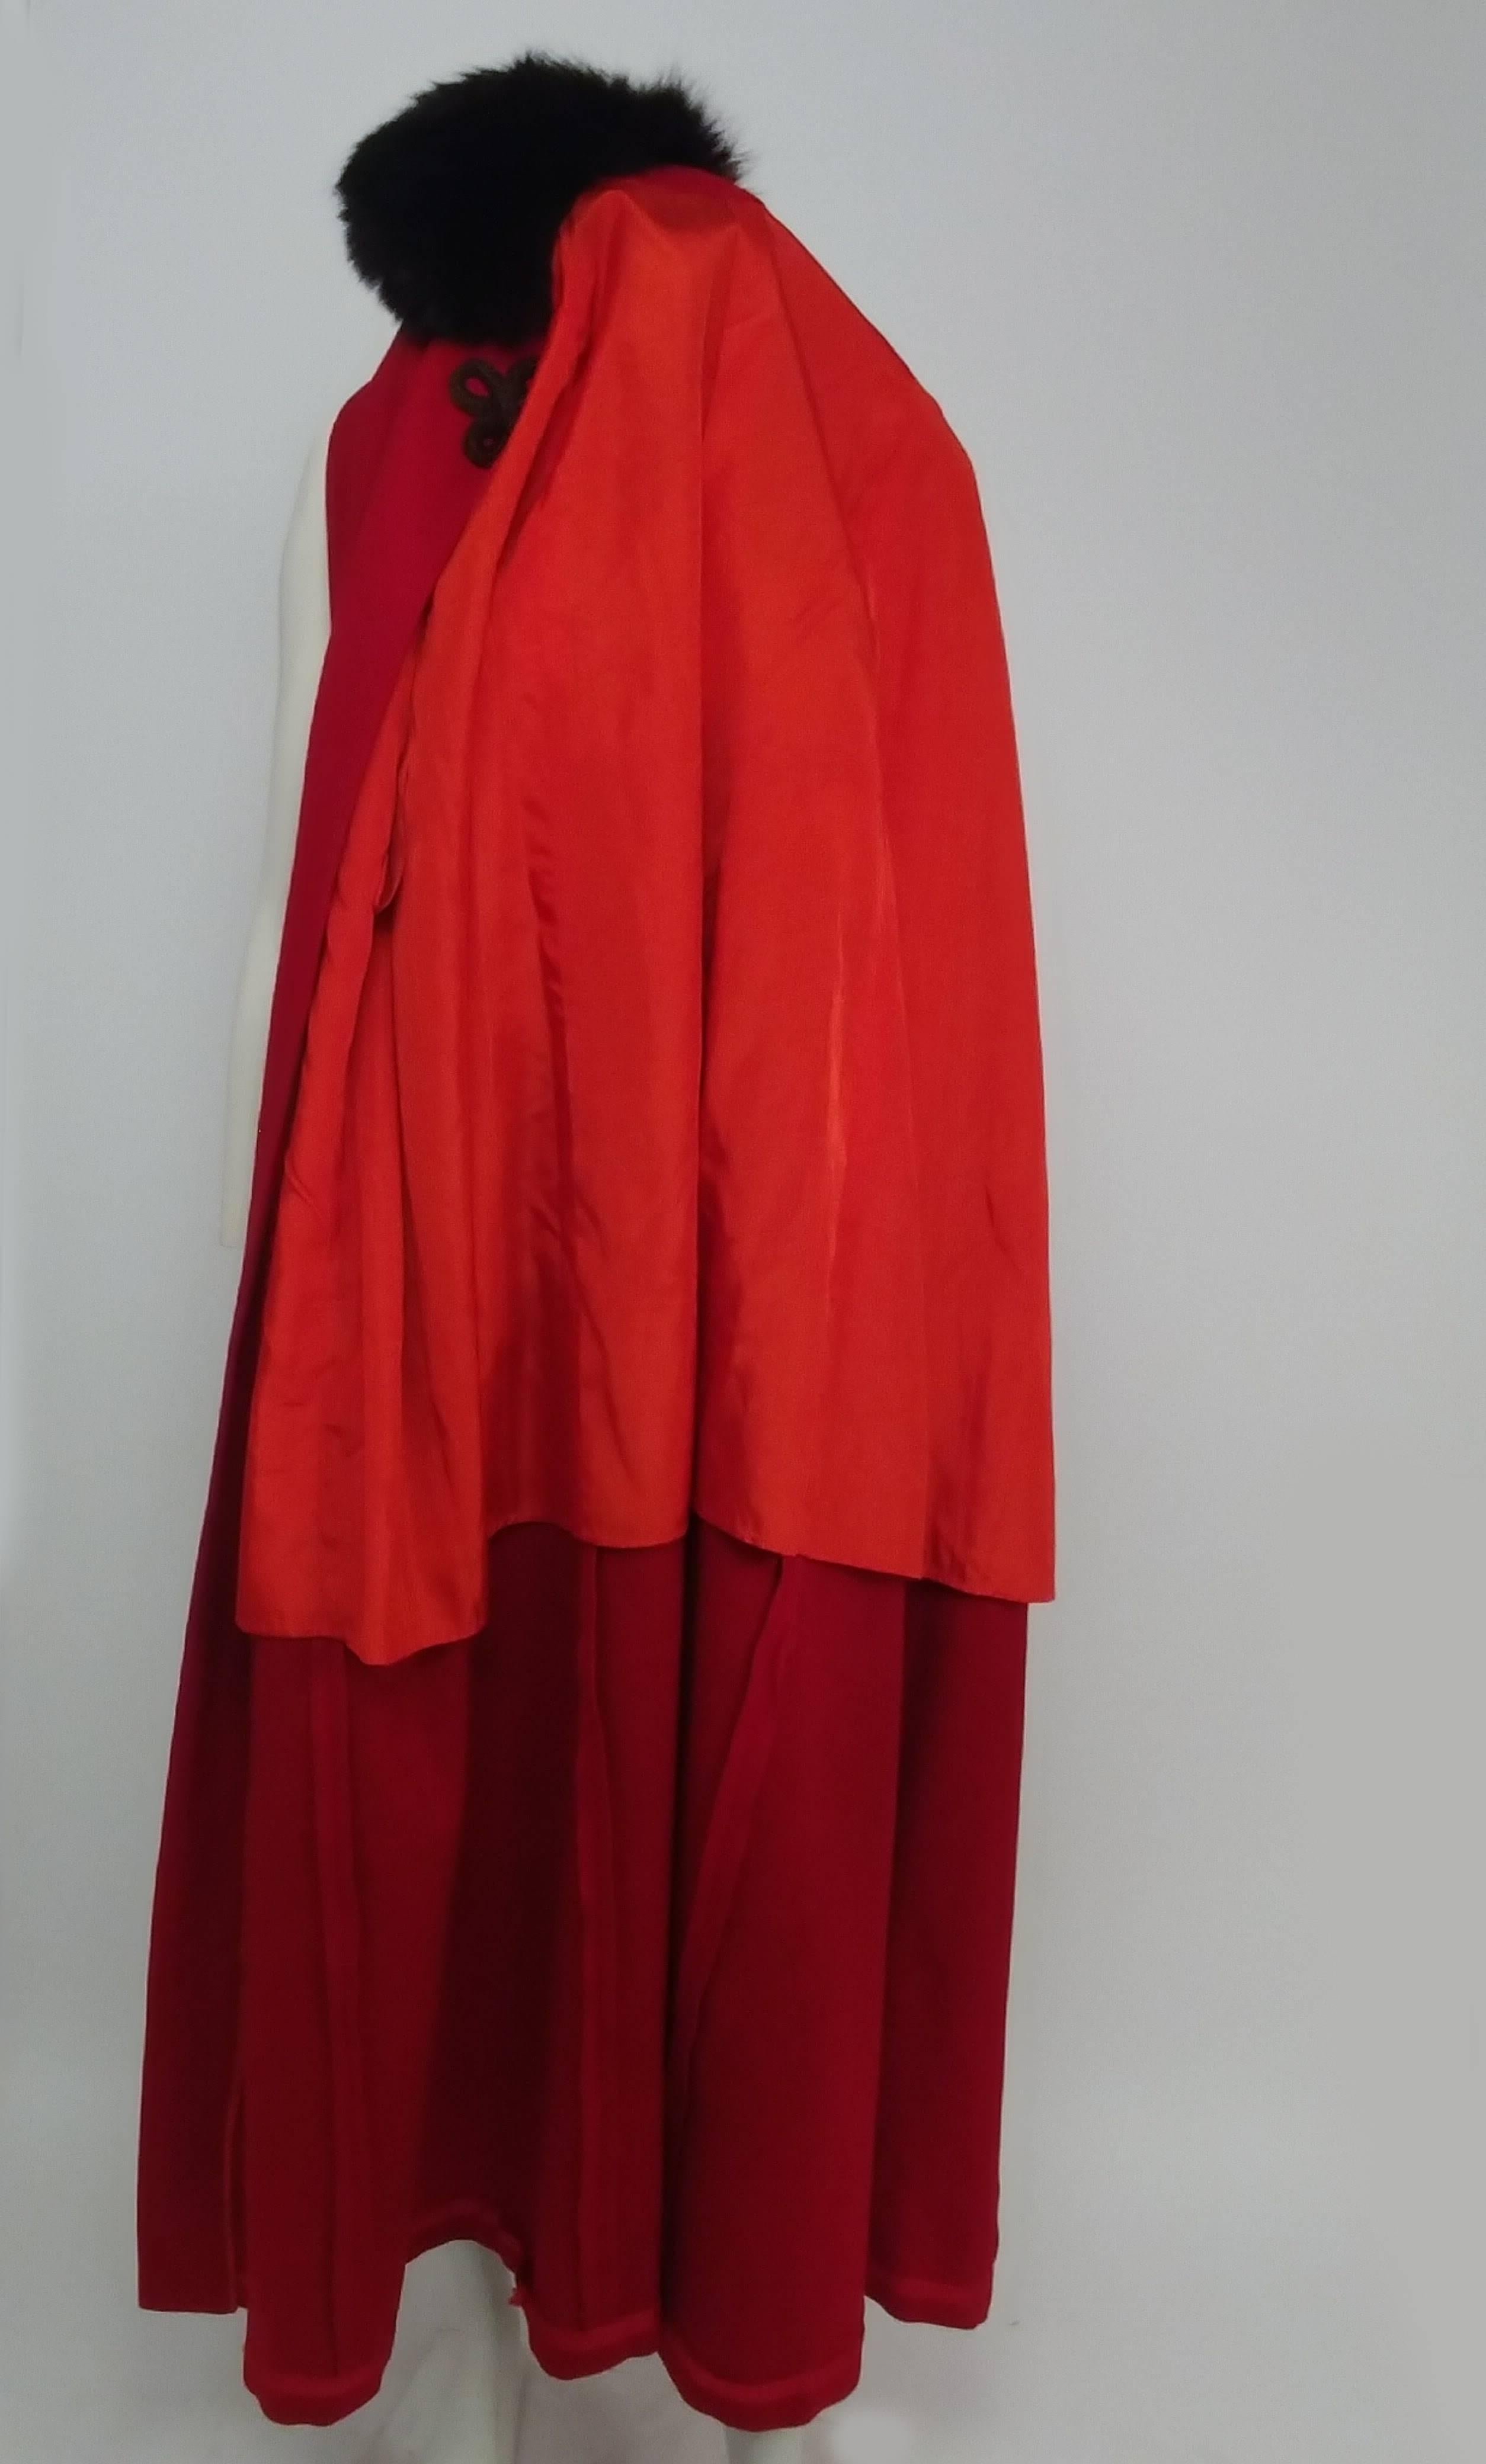 Women's Antique Red Wool Cape with Black Fox Fur Trim